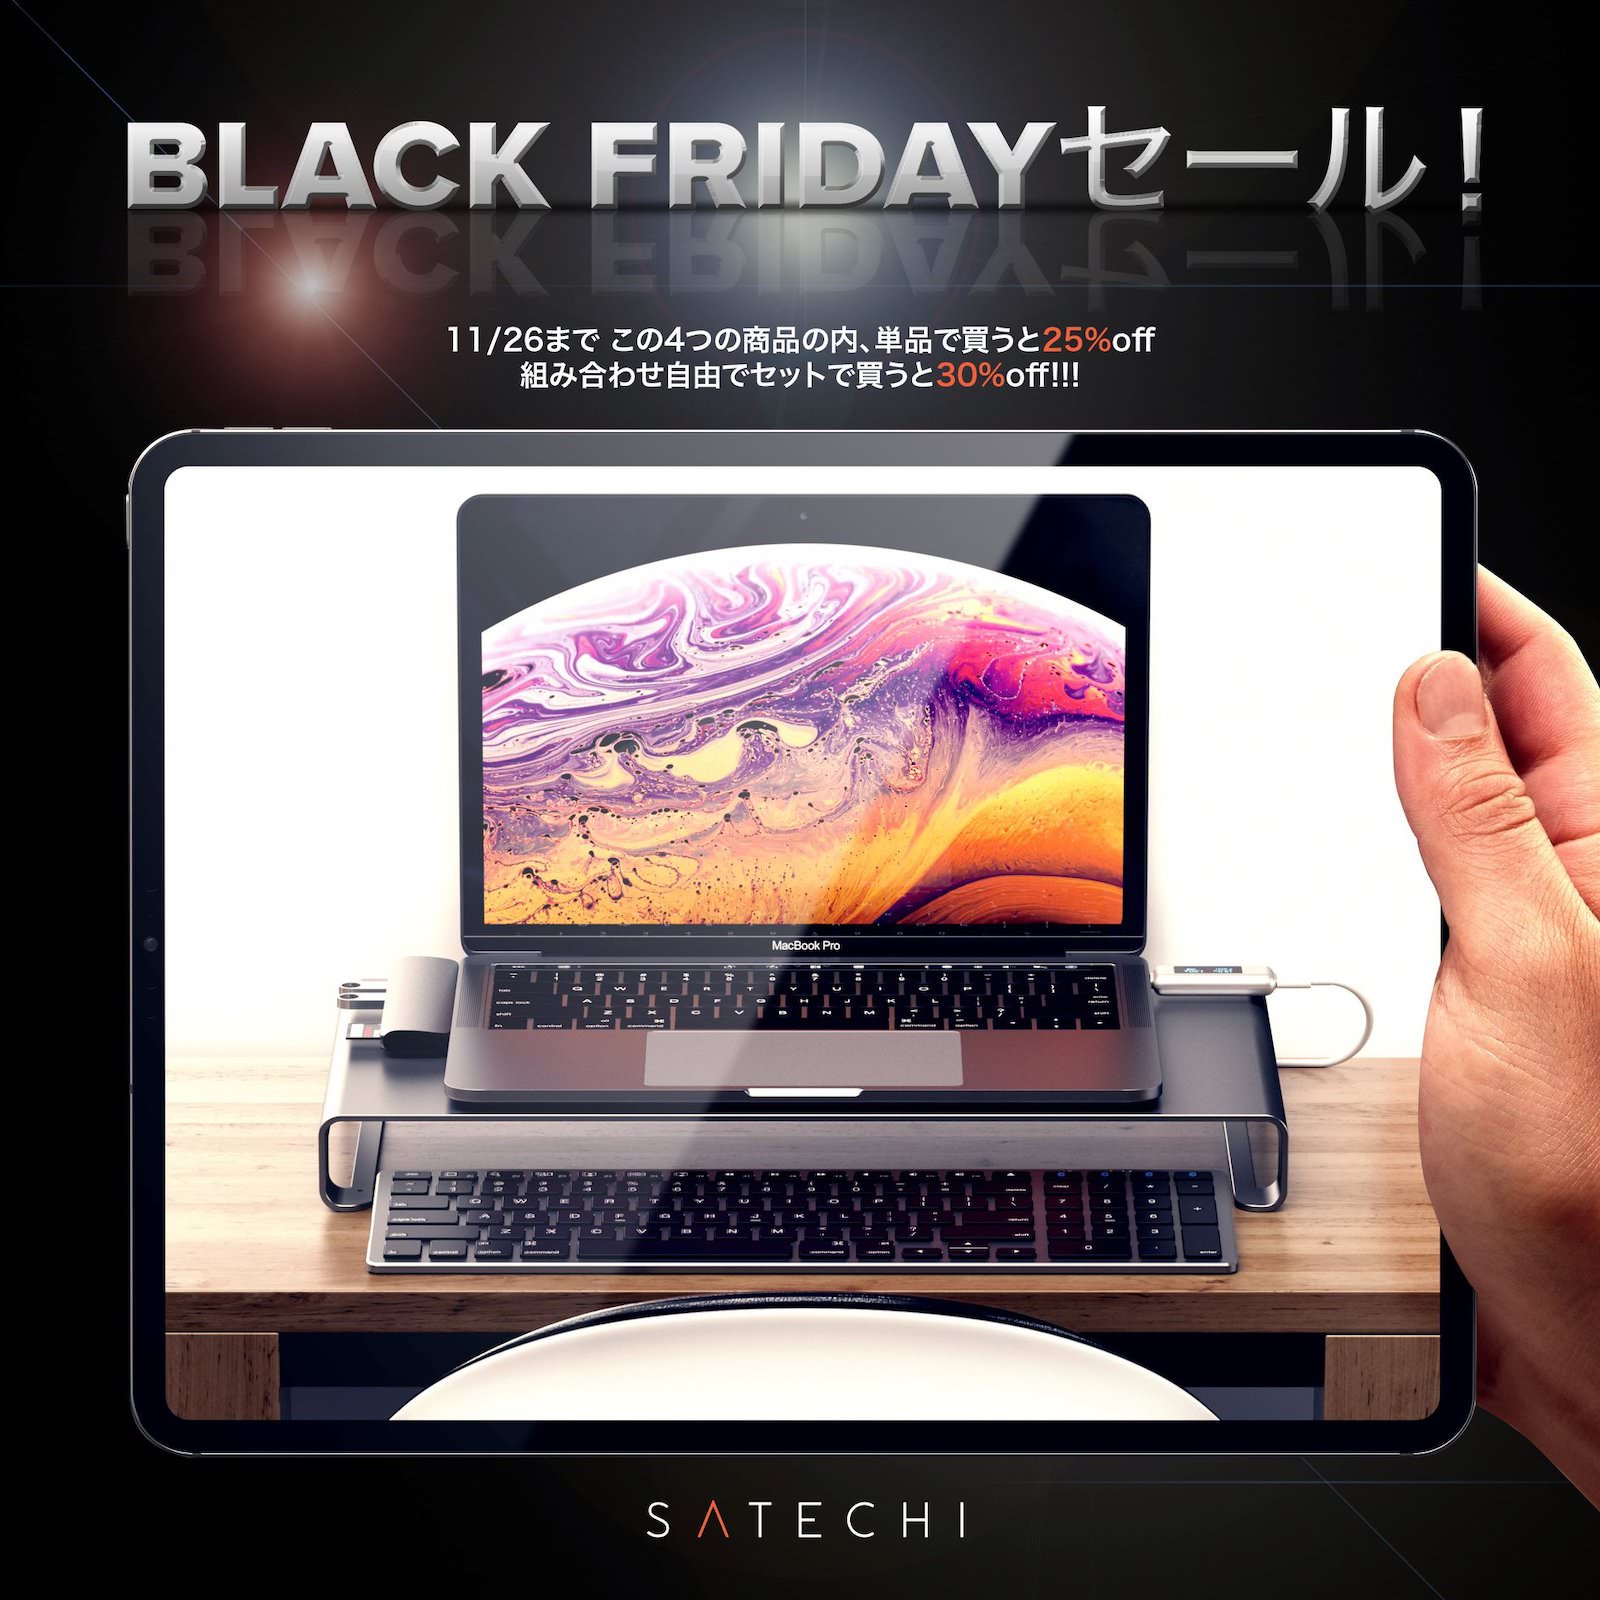 Satechi-Black-Friday-Sale.jpg